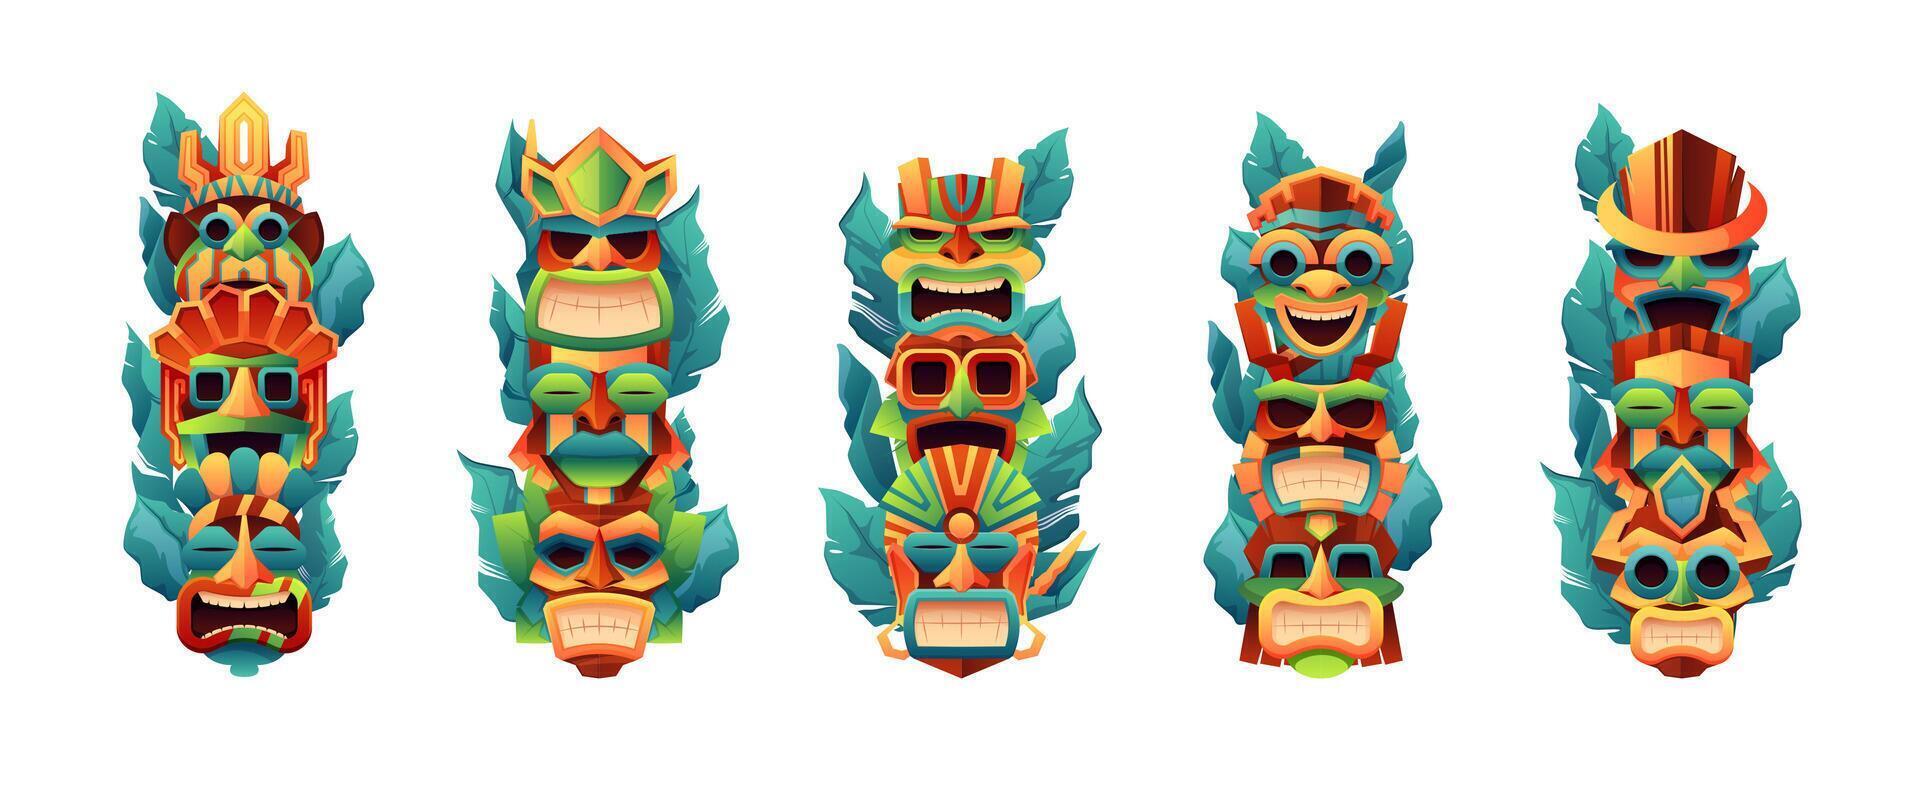 tiki tótems. tradicional primitivo nativo tribal cara mascaras, mexicano polinesio azteca indígena tribu ritual ídolos, dibujos animados étnico arte simbolos vector conjunto